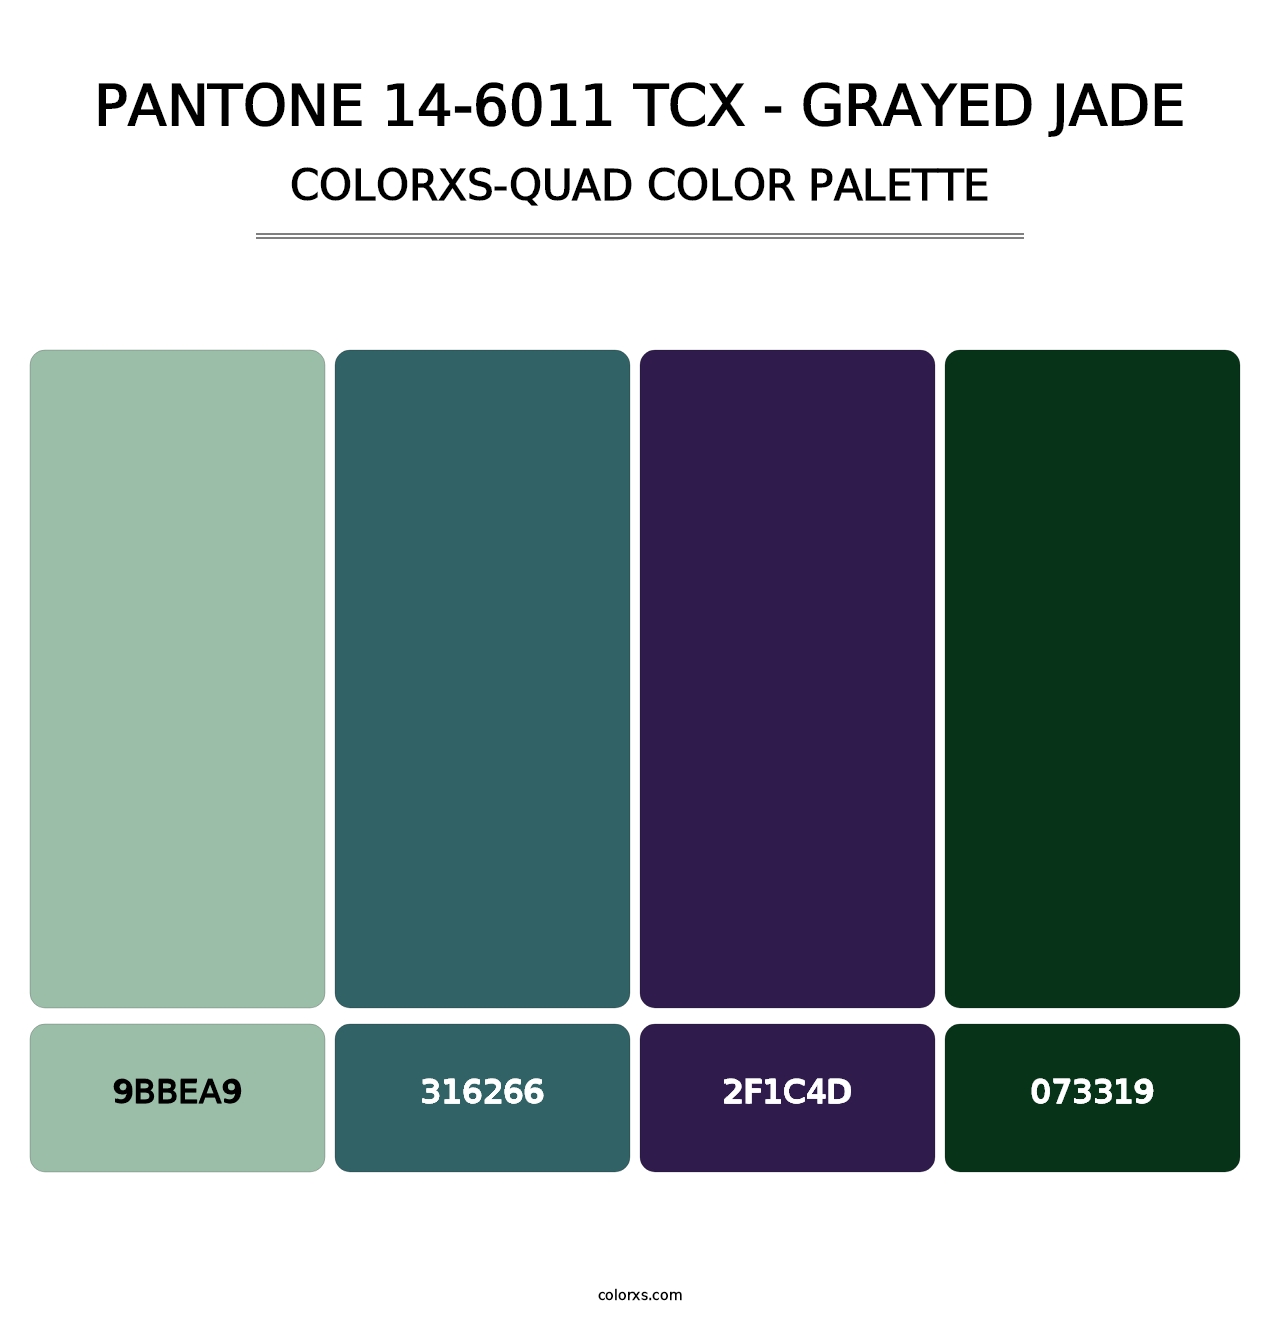 PANTONE 14-6011 TCX - Grayed Jade - Colorxs Quad Palette